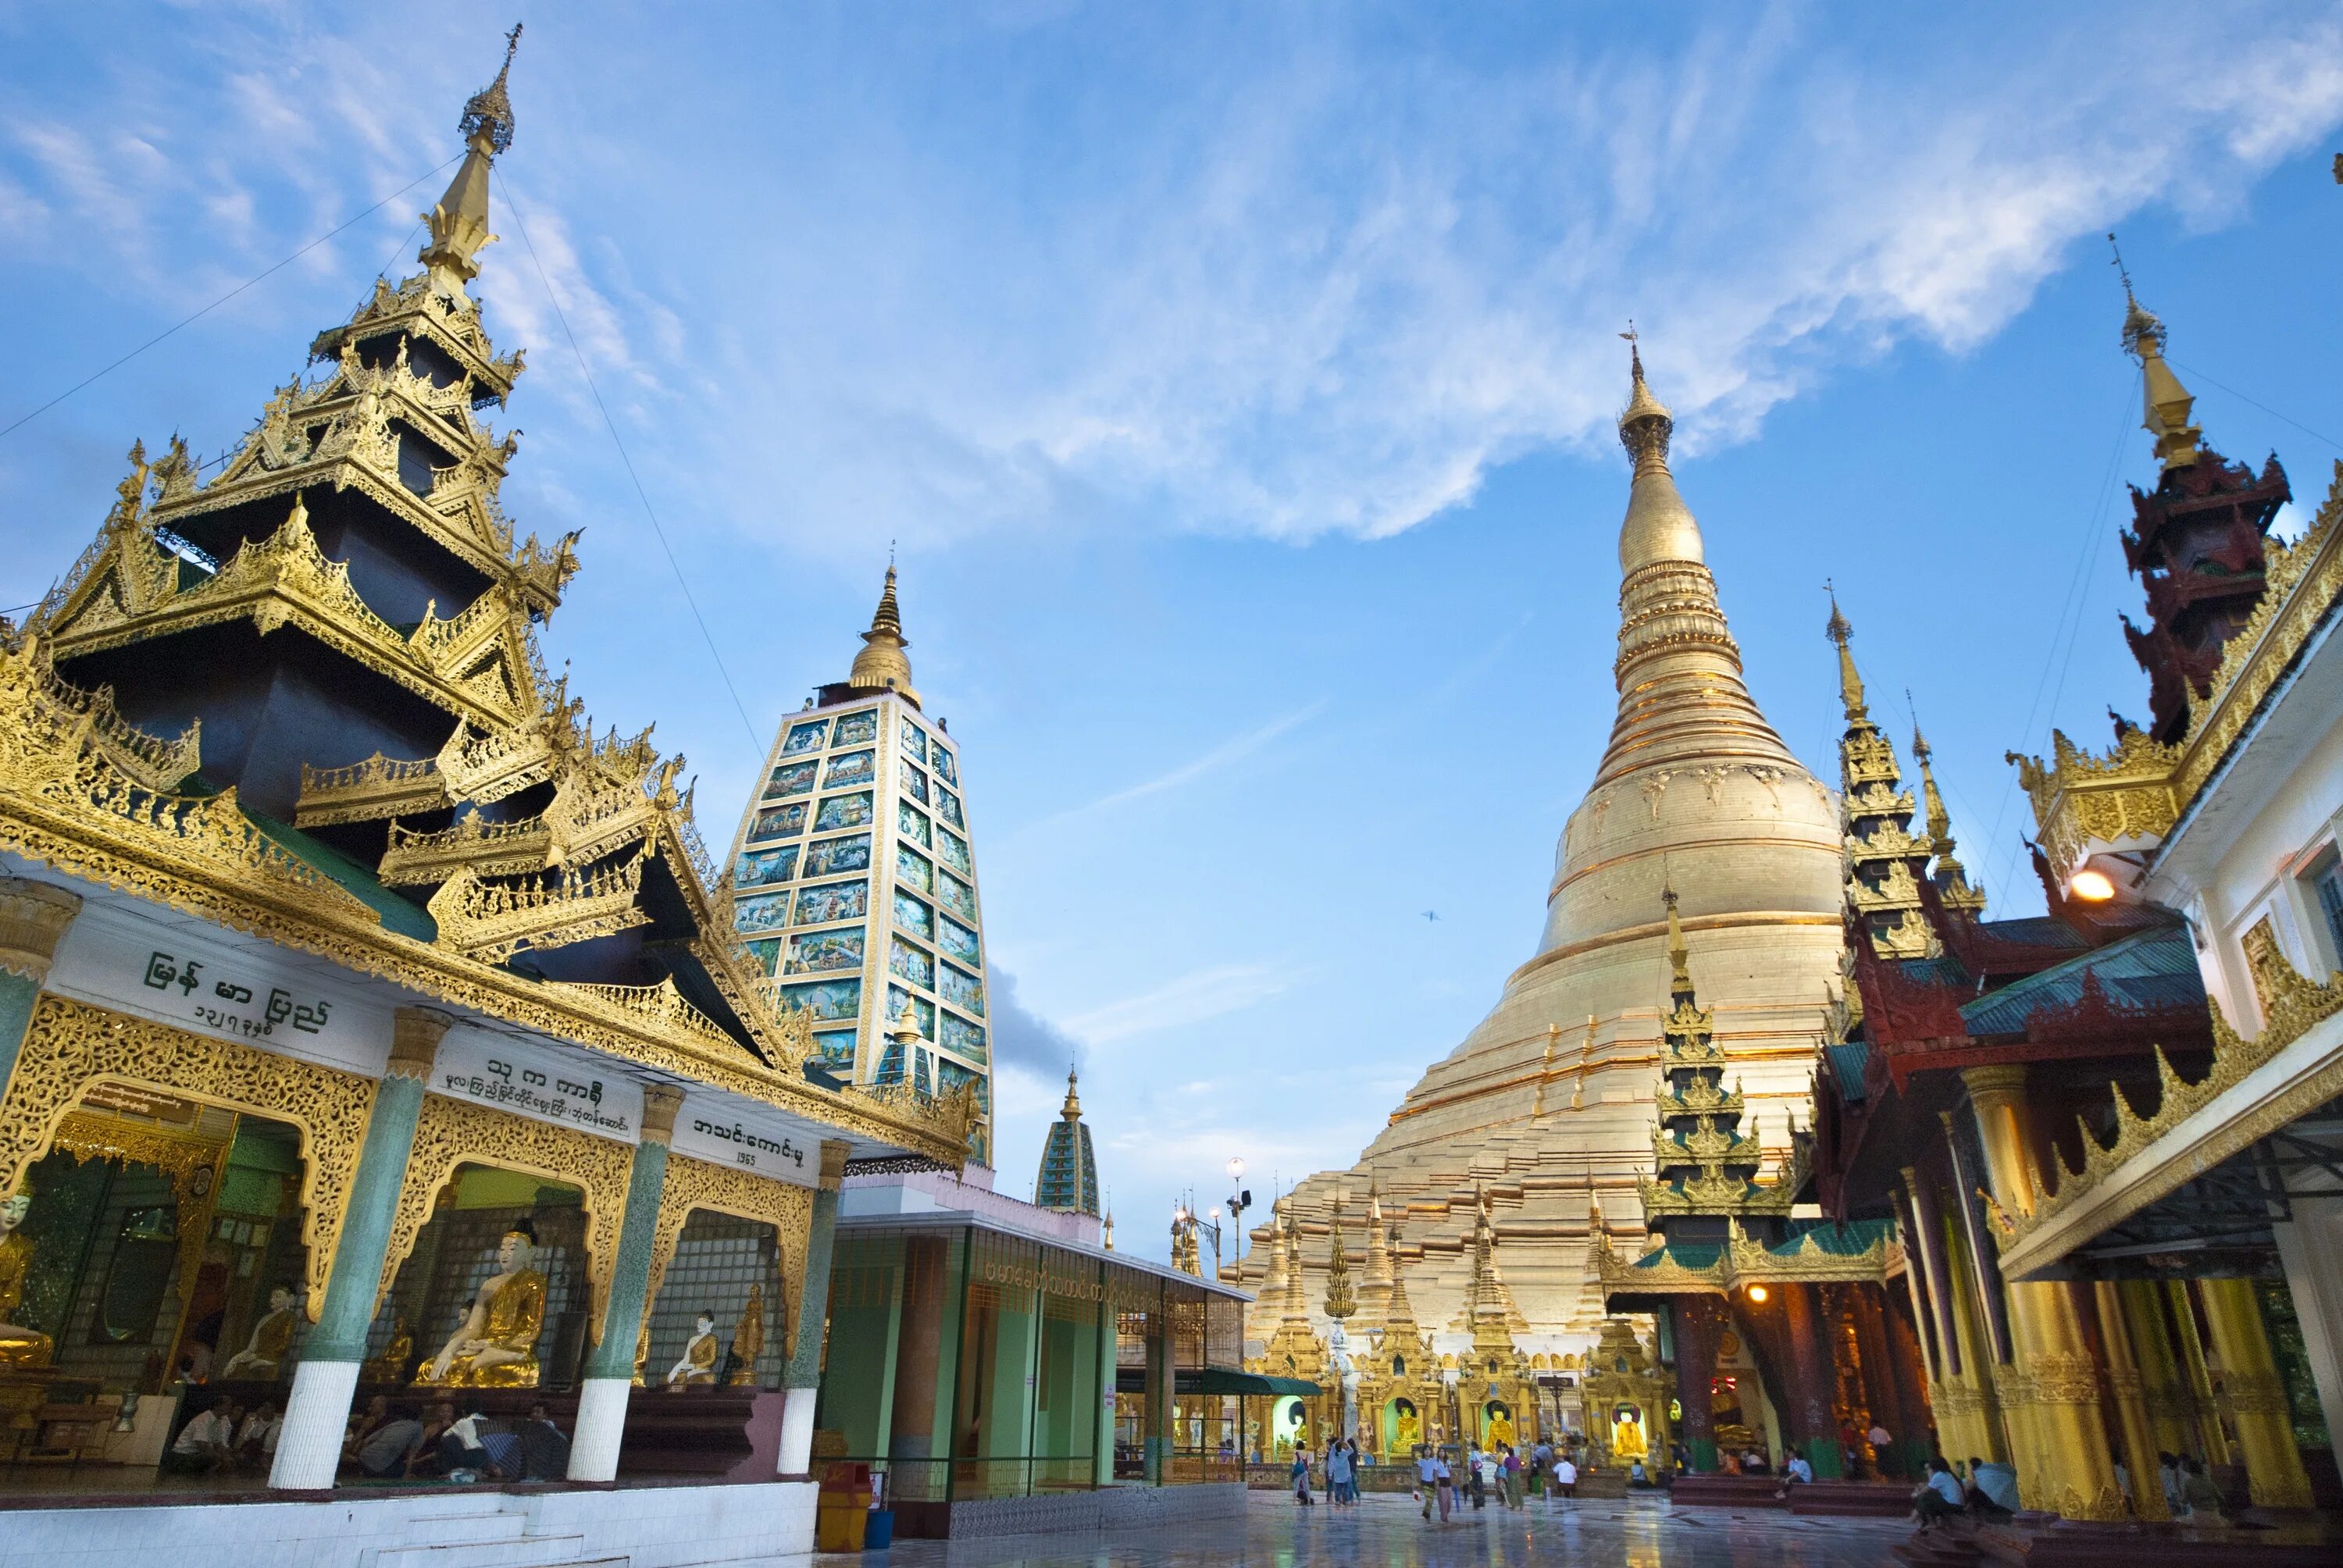 Культурные центры азии. Янгон храм Шведагон. Золотая ступа Шведагон. Золотая пагода Мьянма. Золотой дом Бирма Мьянма.